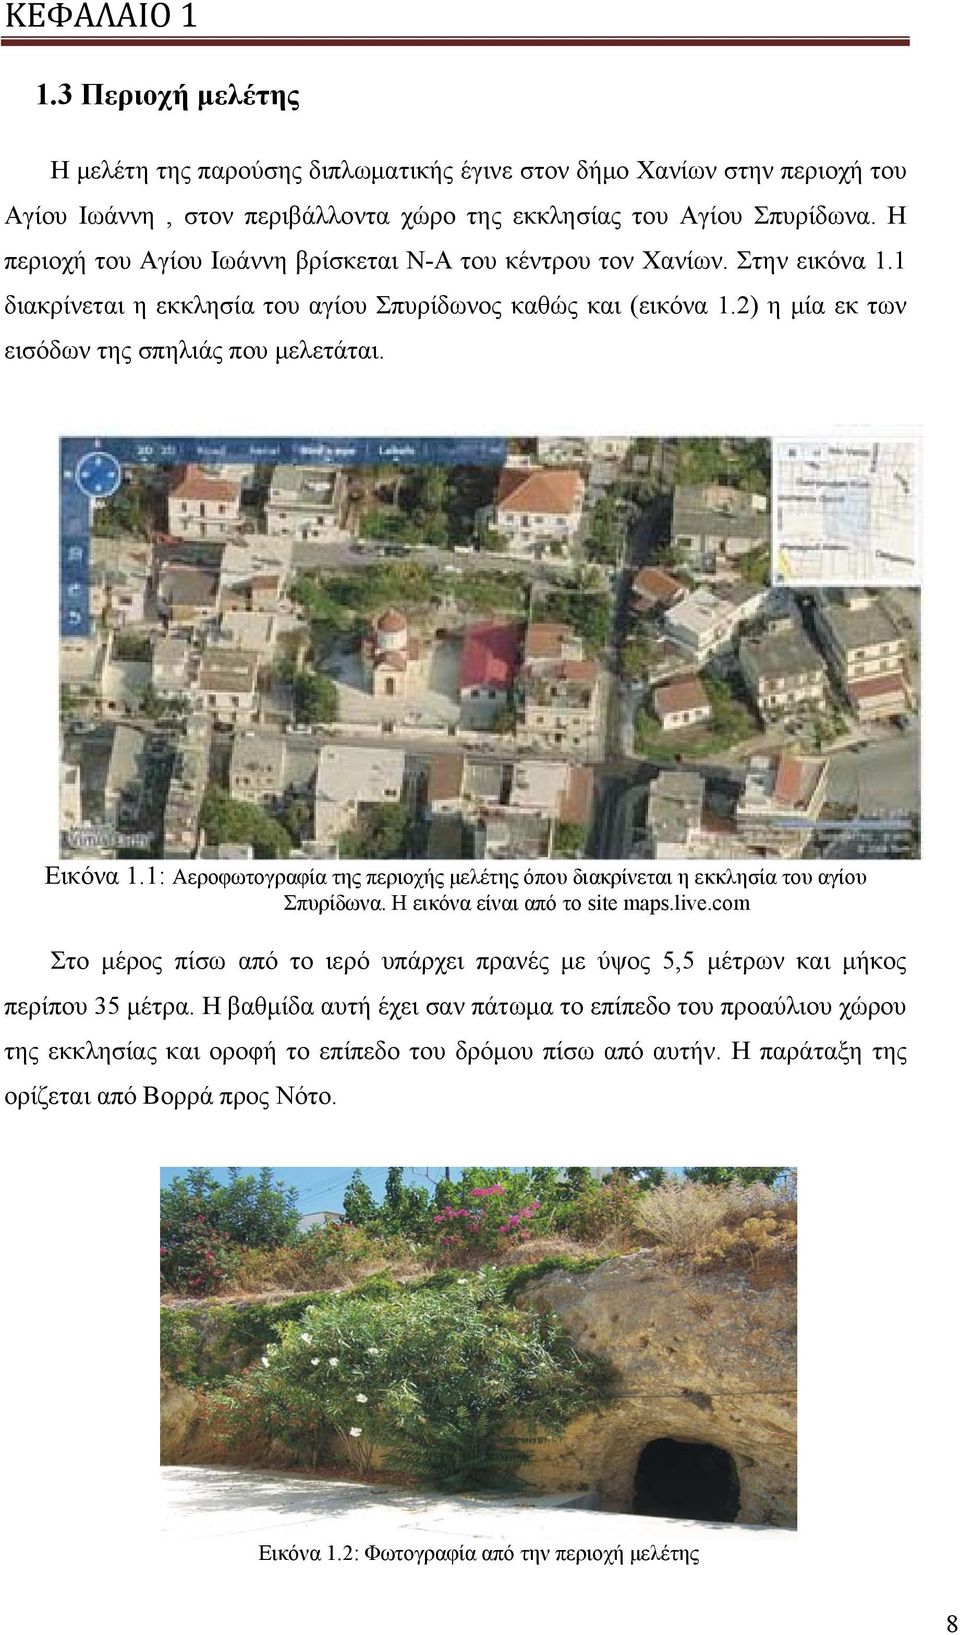 Eικόνα 1.1: Αεροφωτογραφία της περιοχής μελέτης όπου διακρίνεται η εκκλησία του αγίου Σπυρίδωνα. Η εικόνα είναι από το site maps.live.